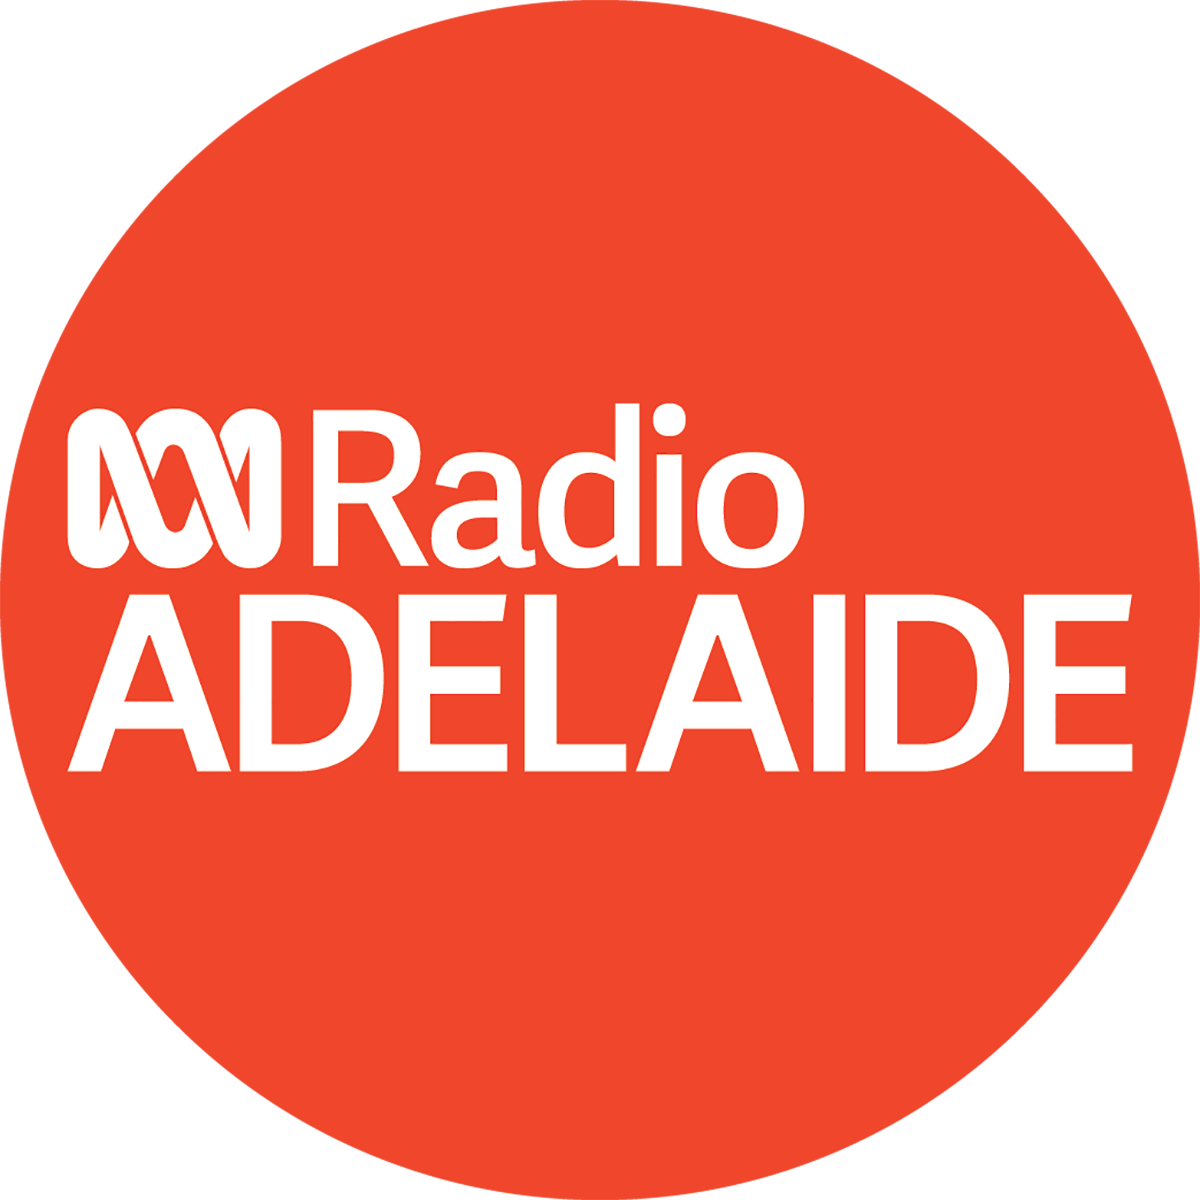 ABC Radio Adelaide Logopedia Fandom